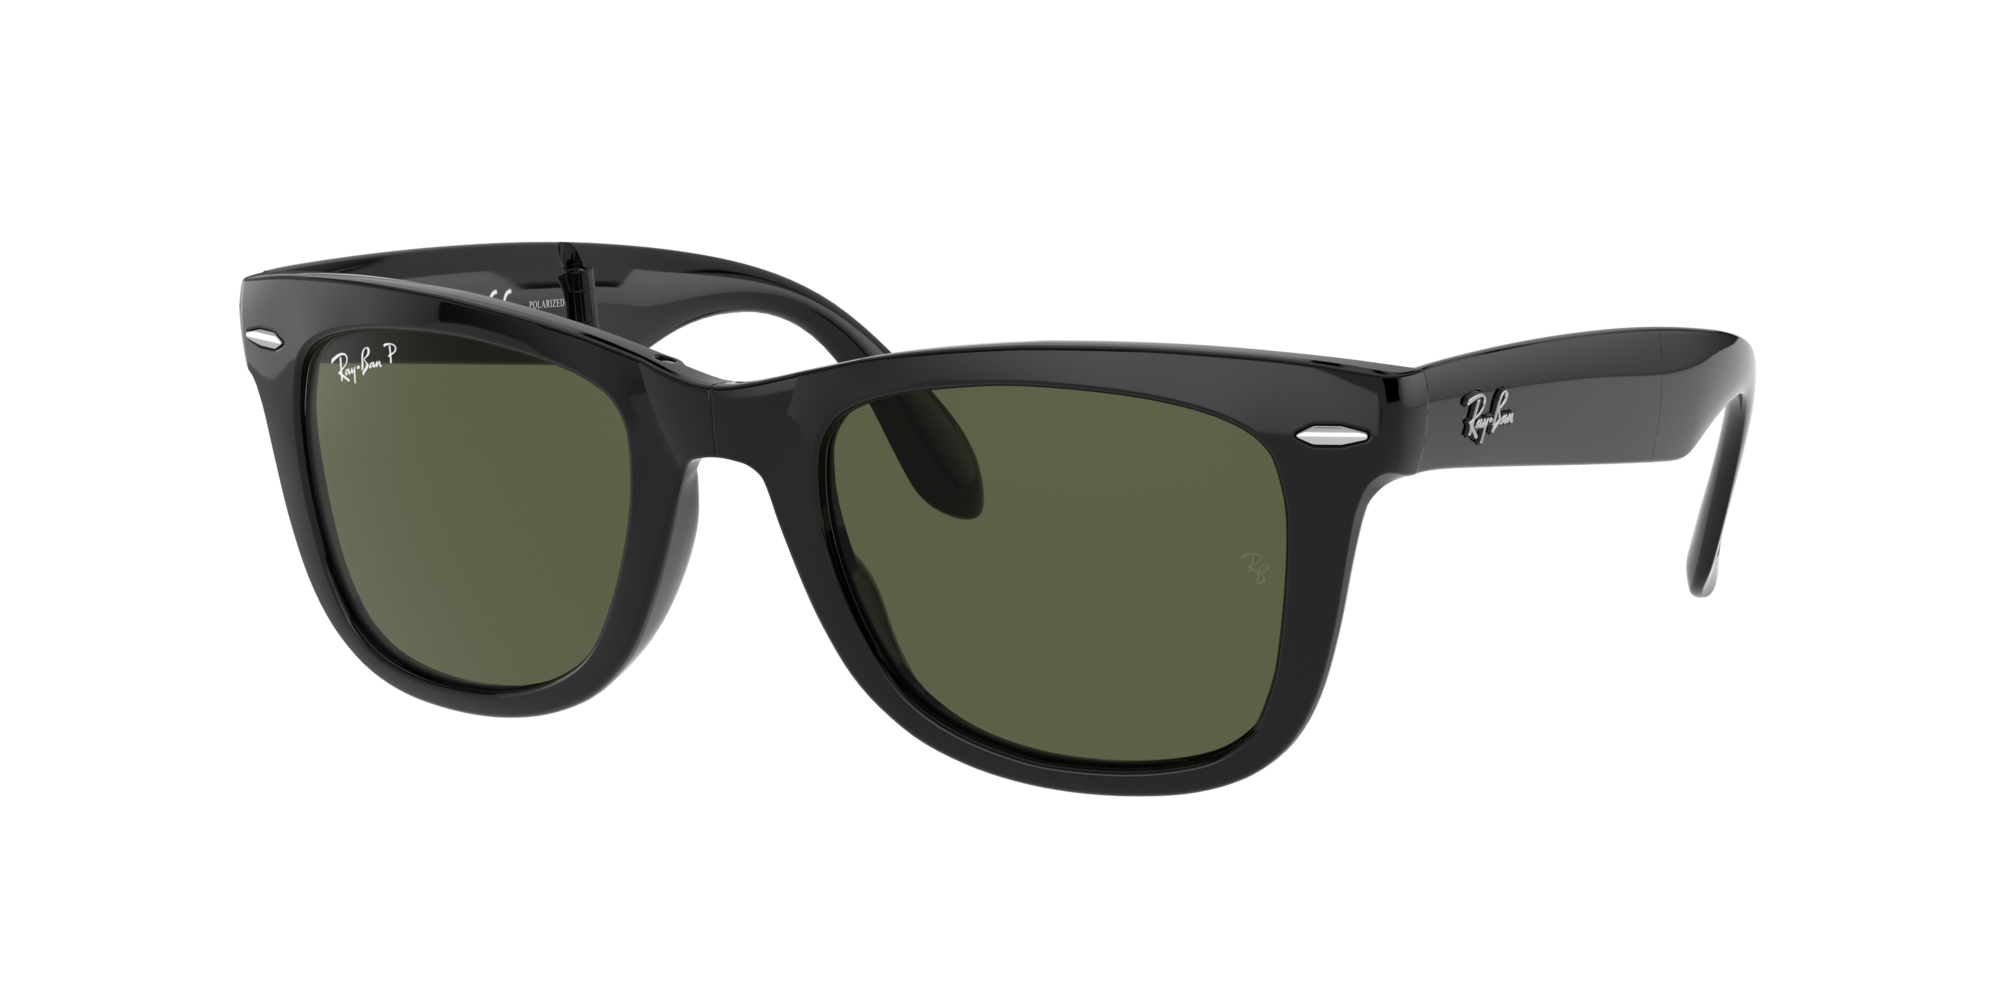 wayfarer sunglasses polarized